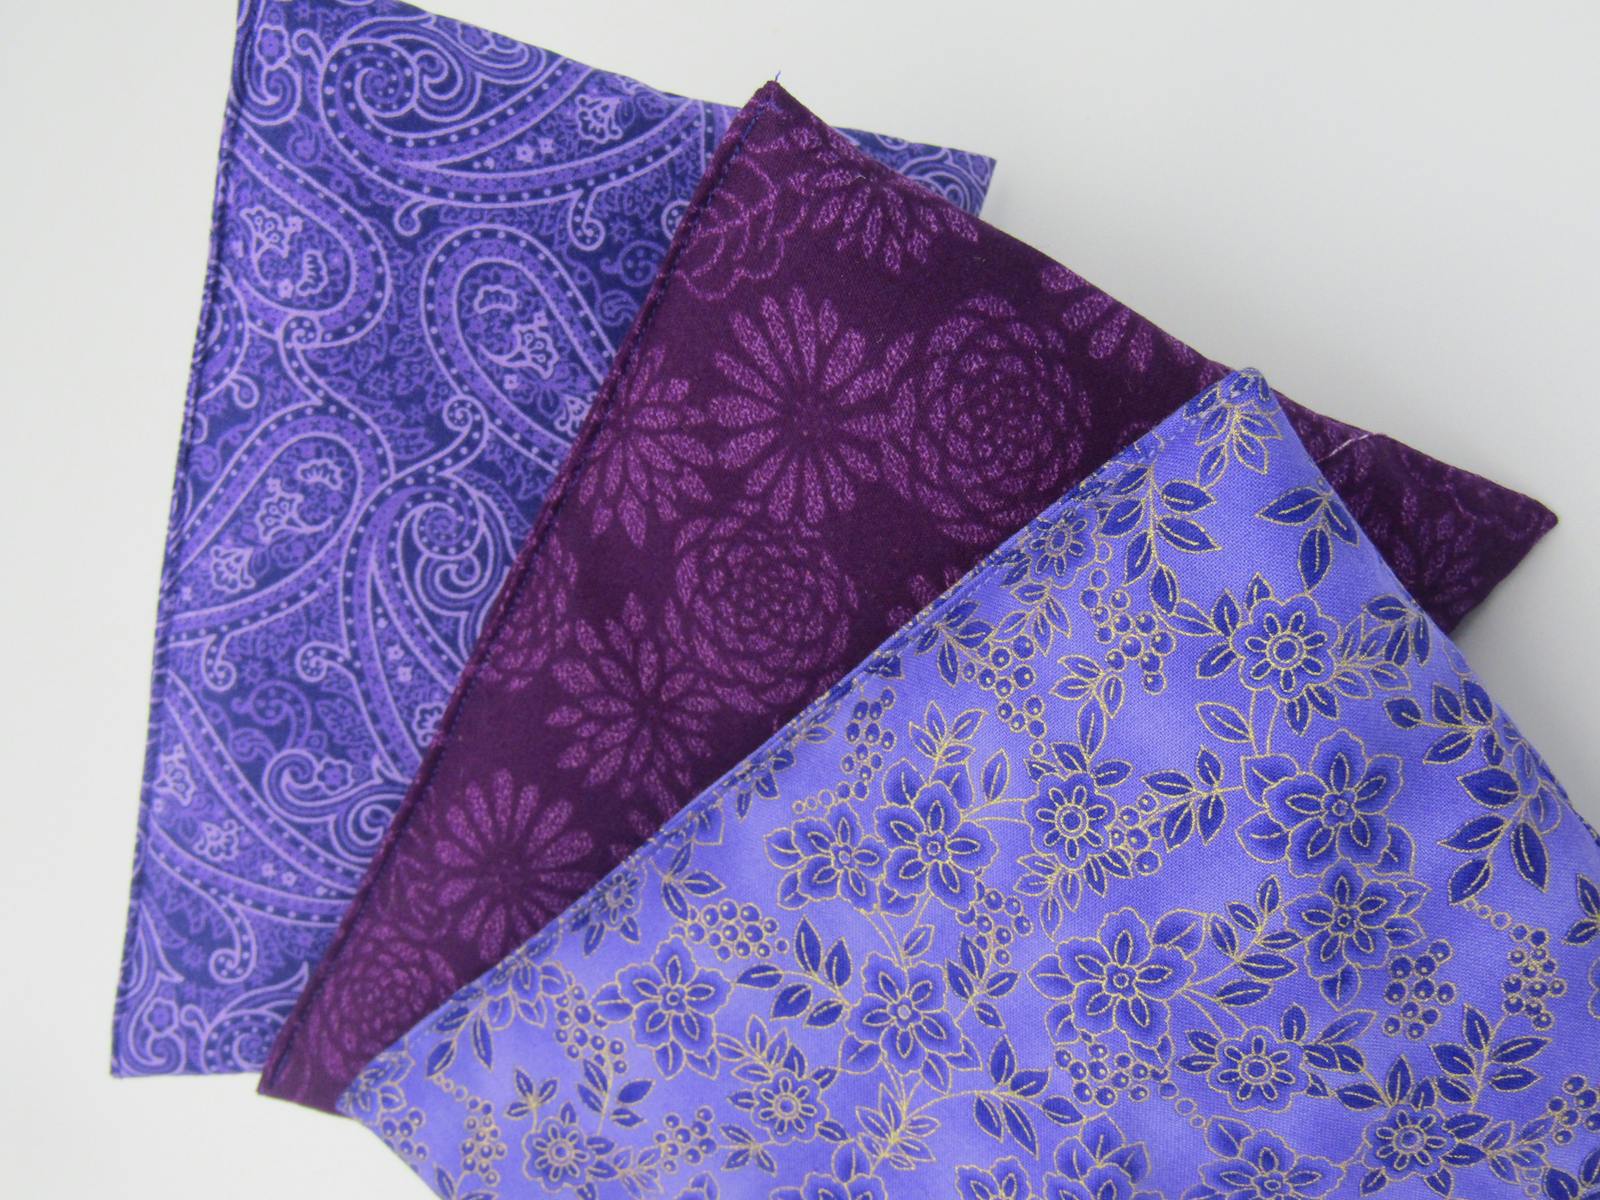 Lavender Sleep Pillows